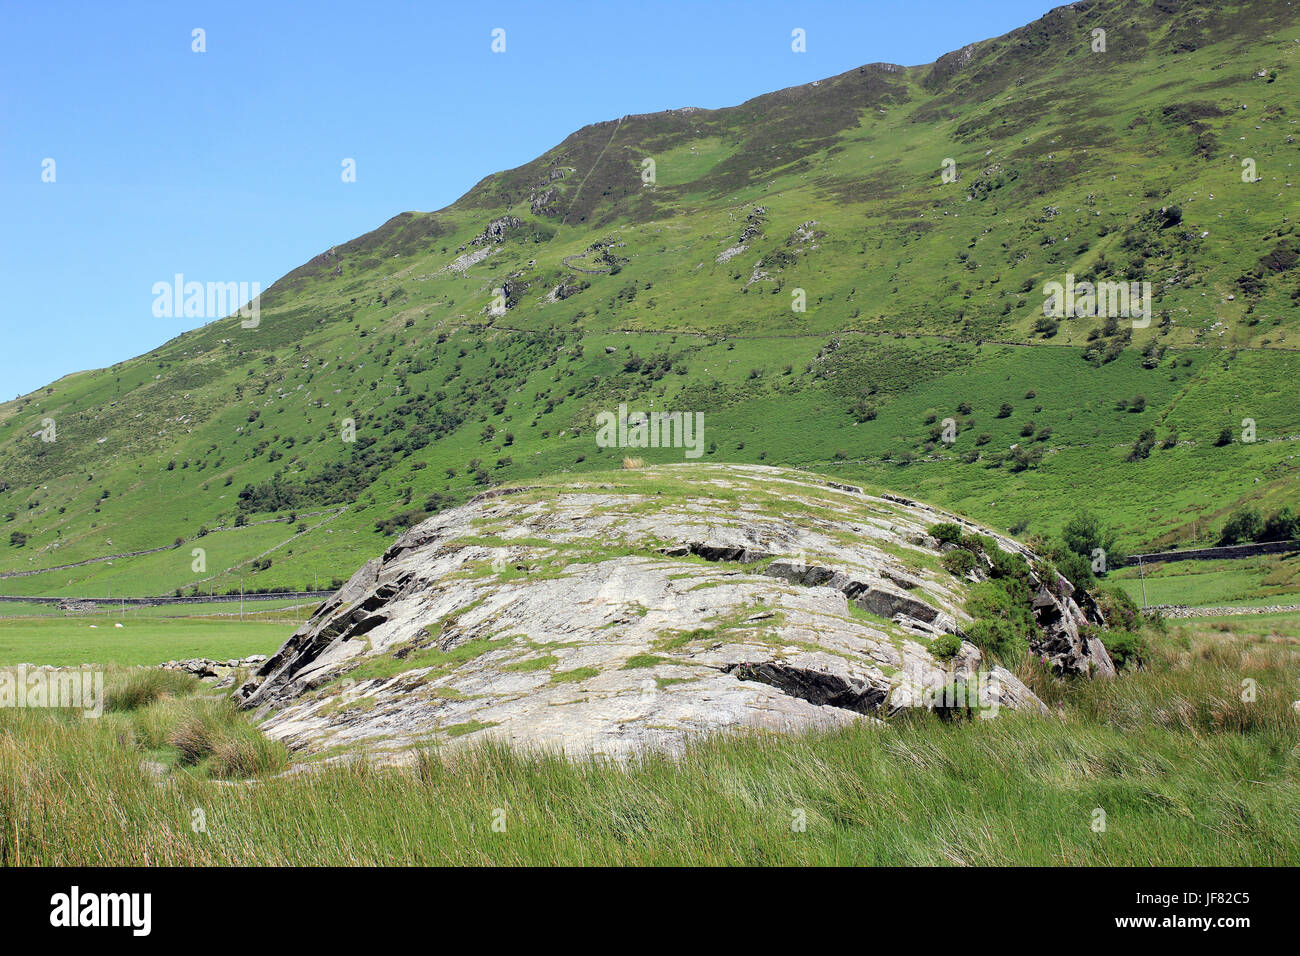 Roche Mountonee in the Nant Ffrancon Valley, Snowdonia, Wales Stock Photo